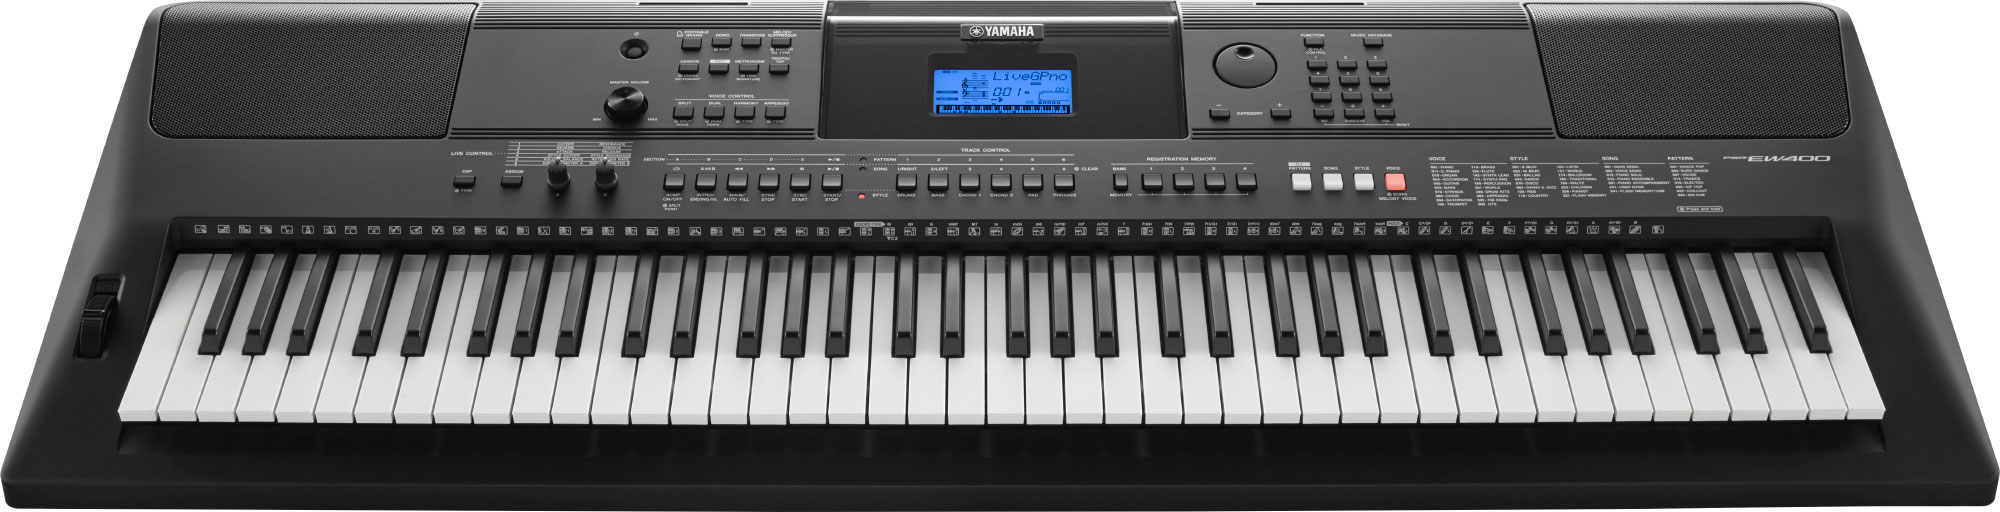 Yamaha Psr-ew400 - Clavier Arrangeur - Variation 1